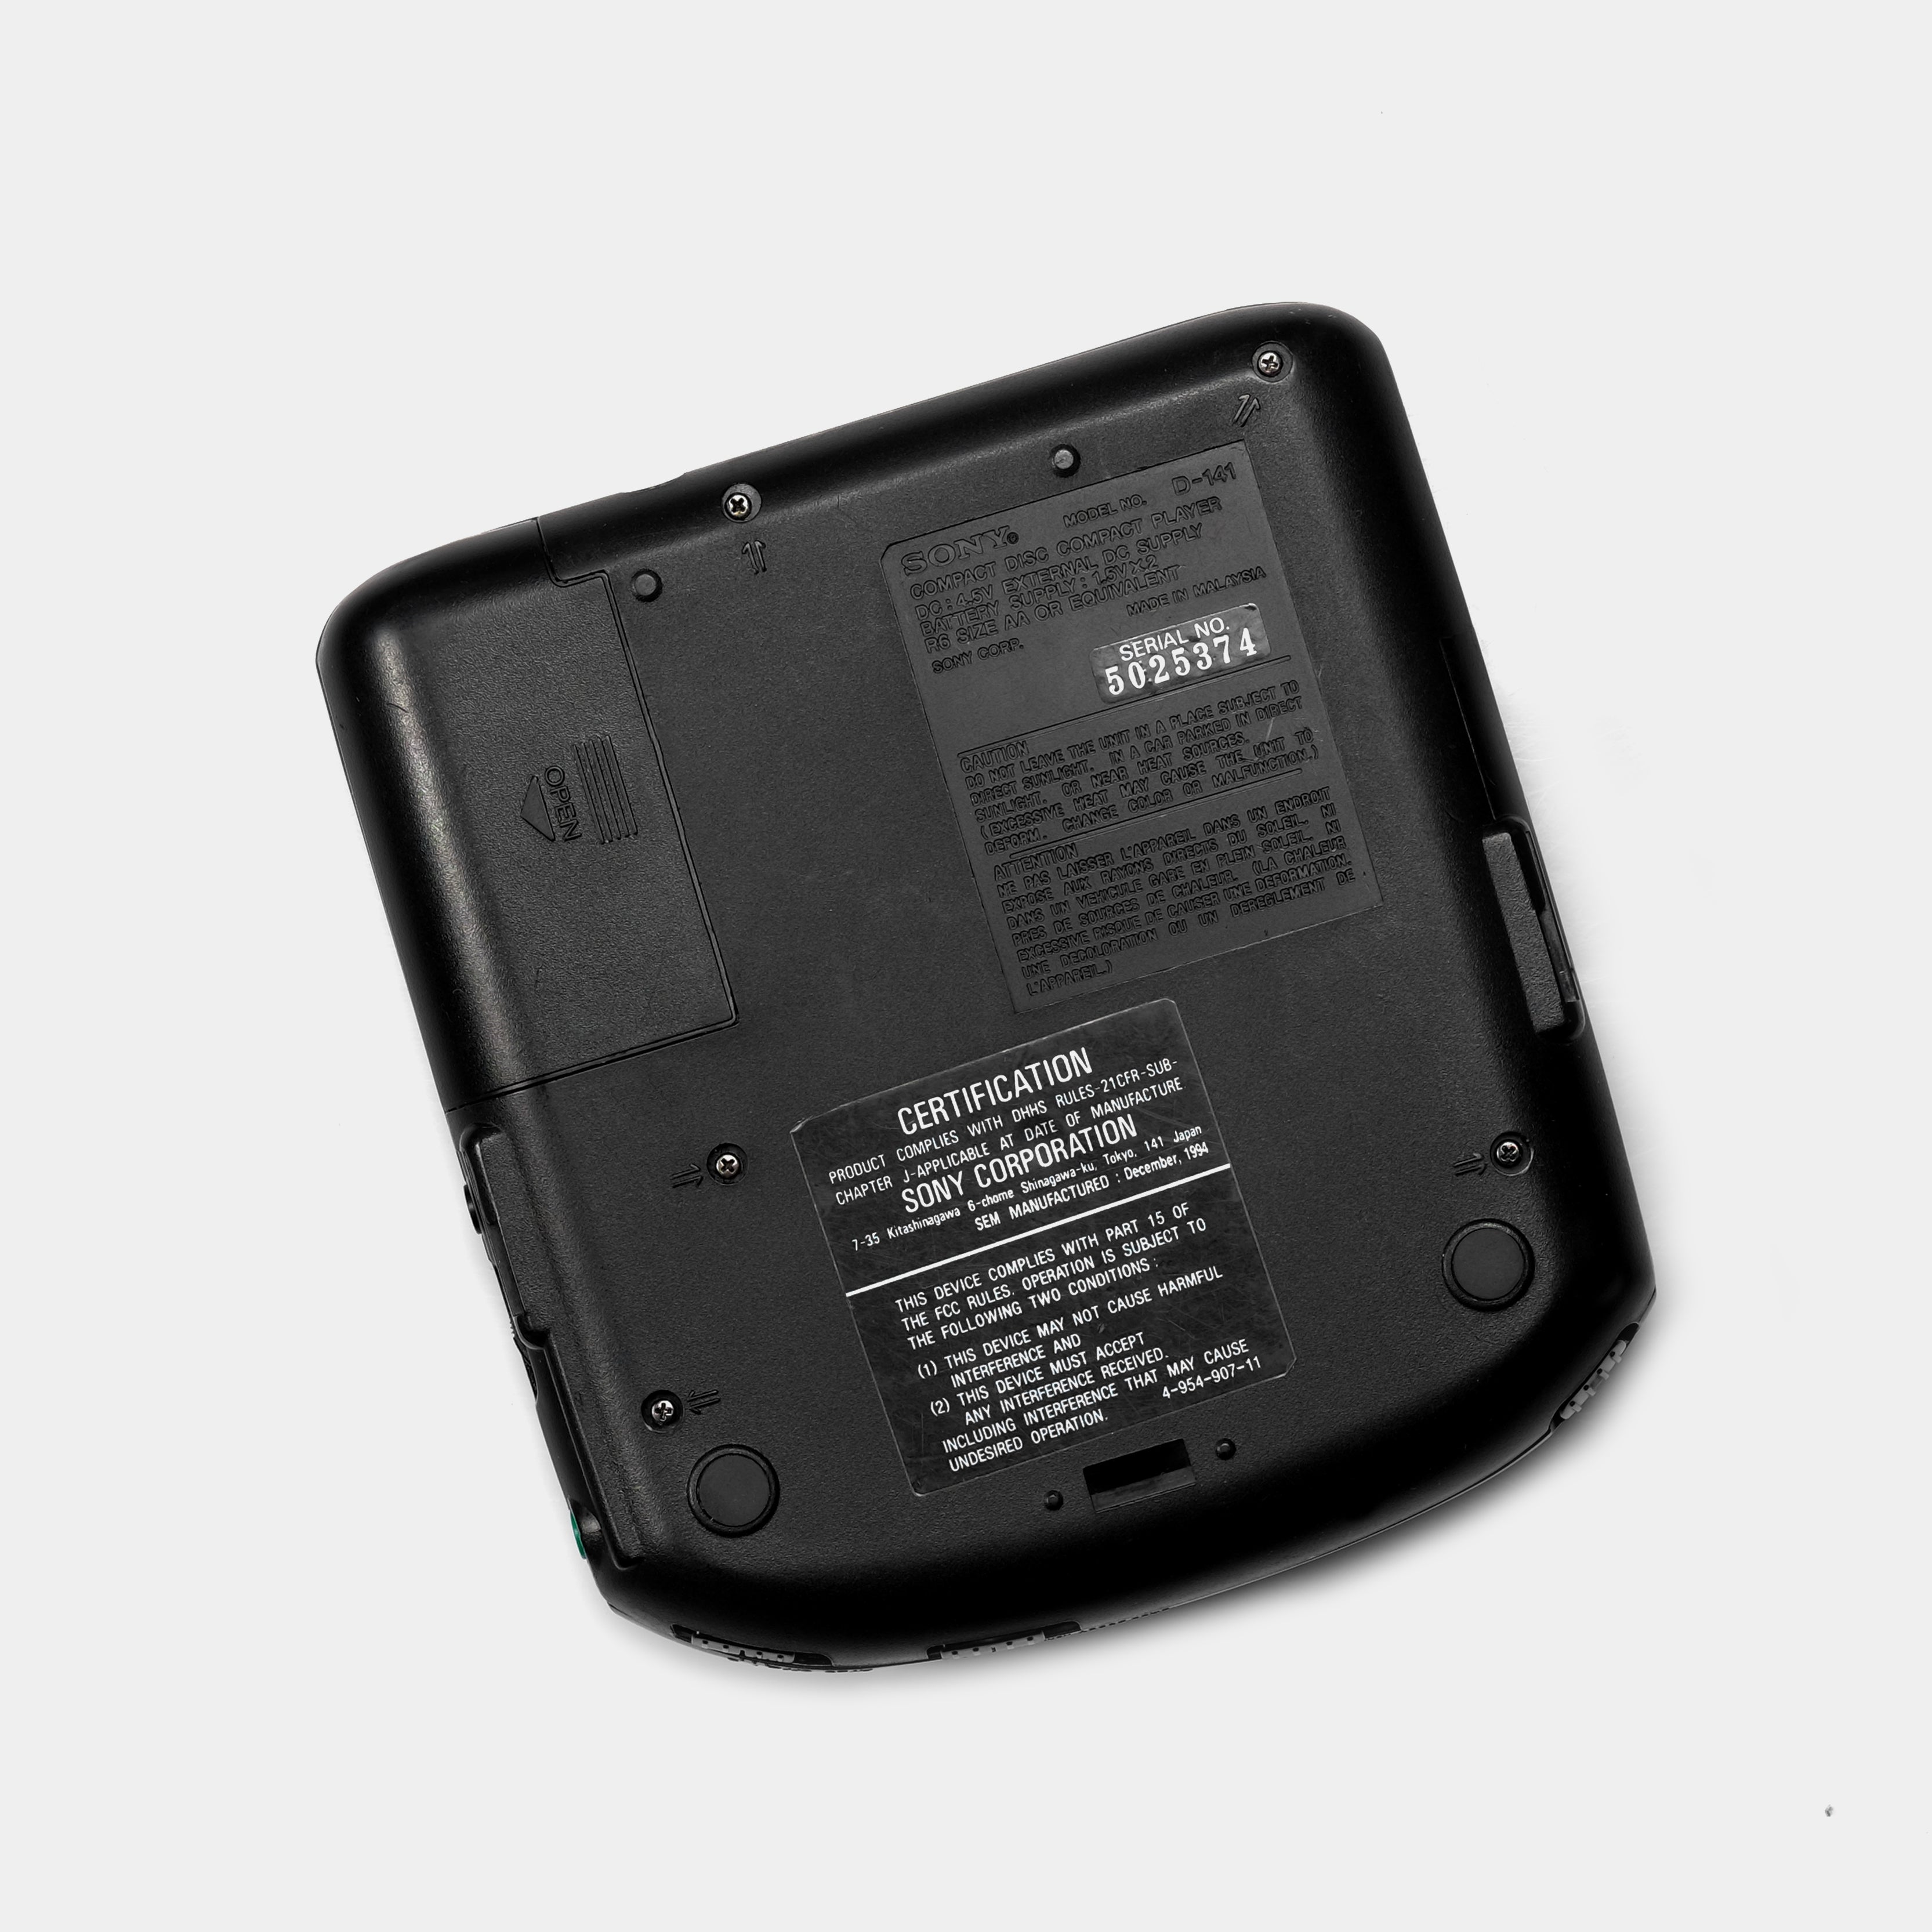 Sony Discman D-141 Portable CD Player